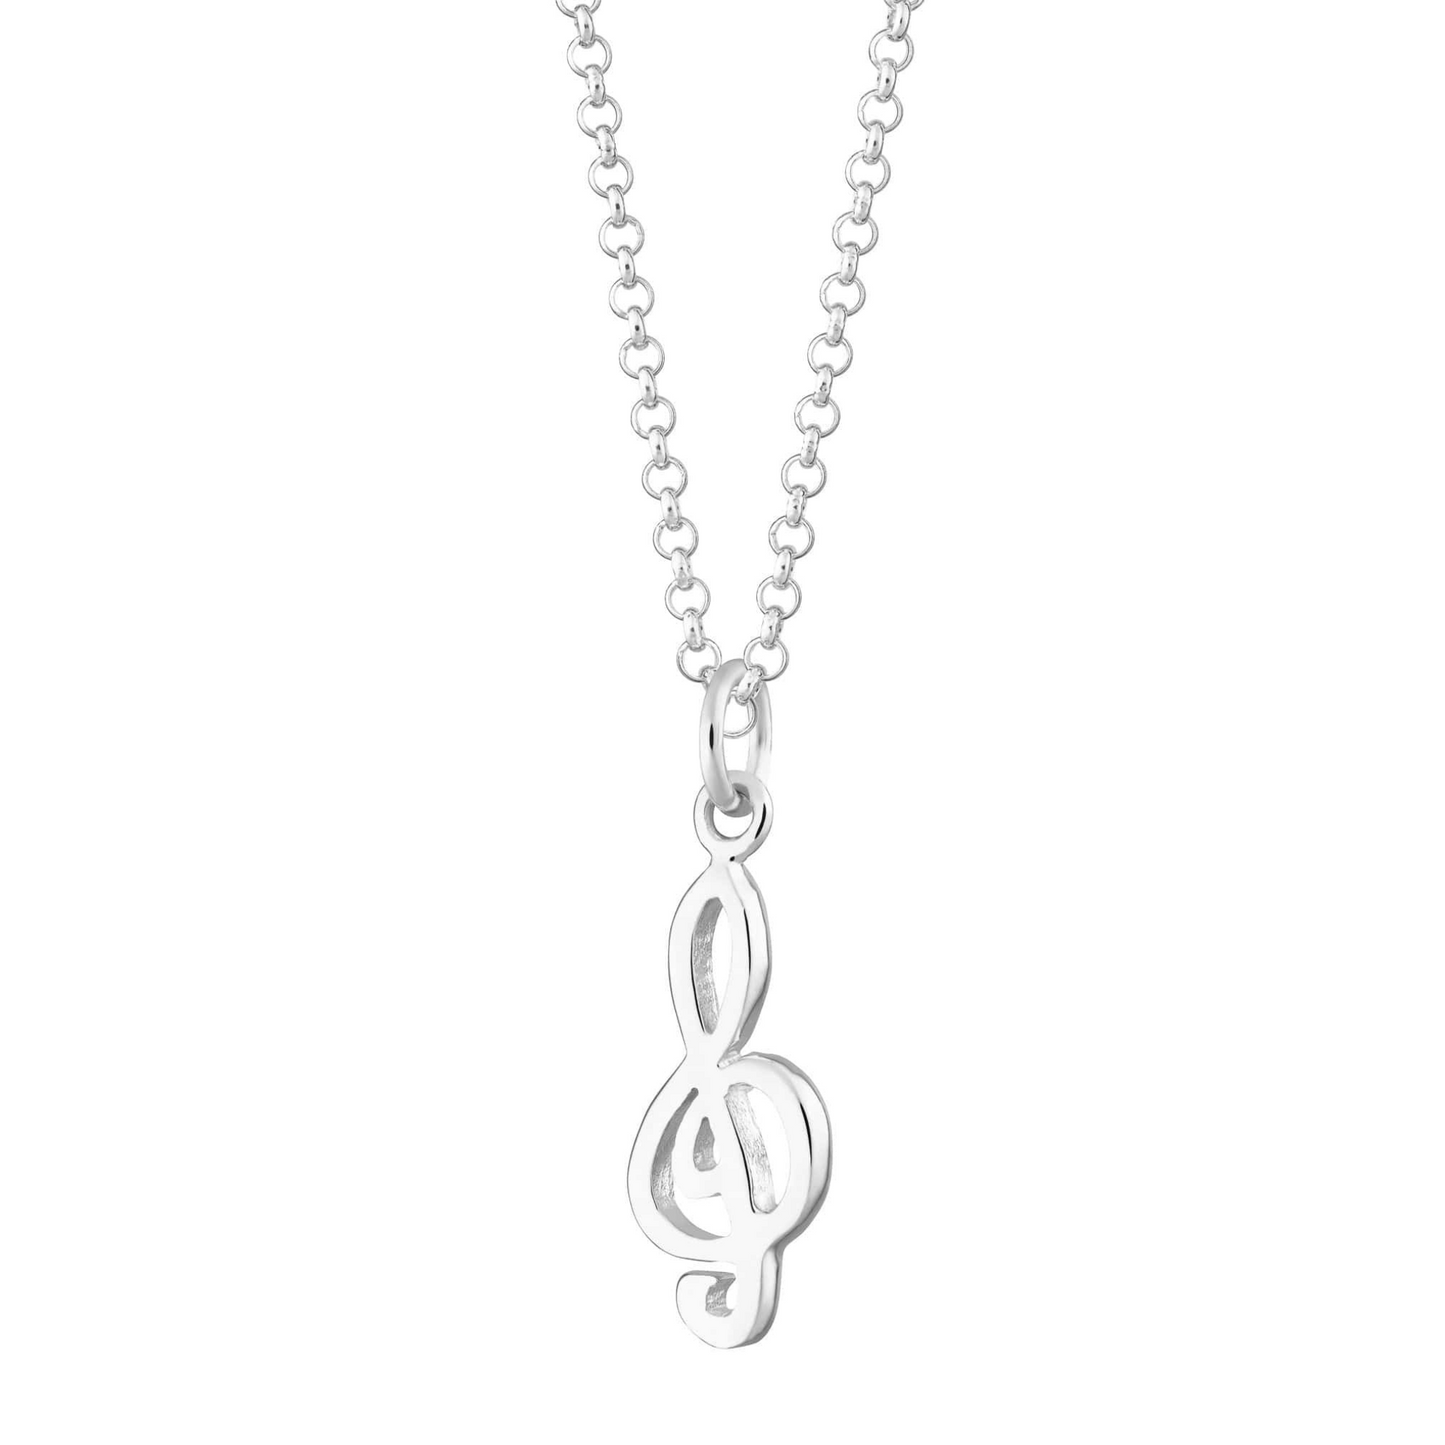 silver treble clef charm necklace.